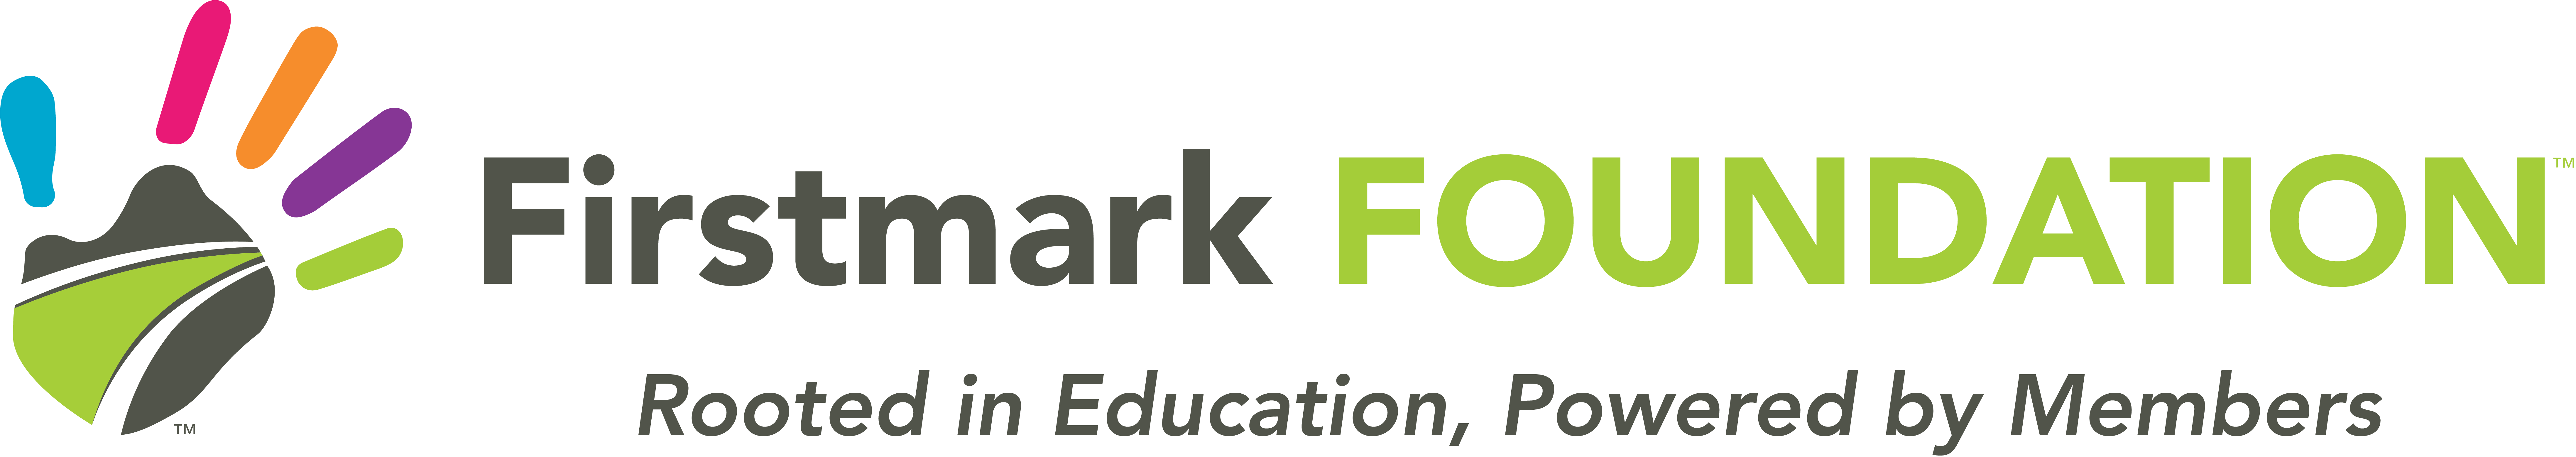 Firstmark Foundation Logo Slogan